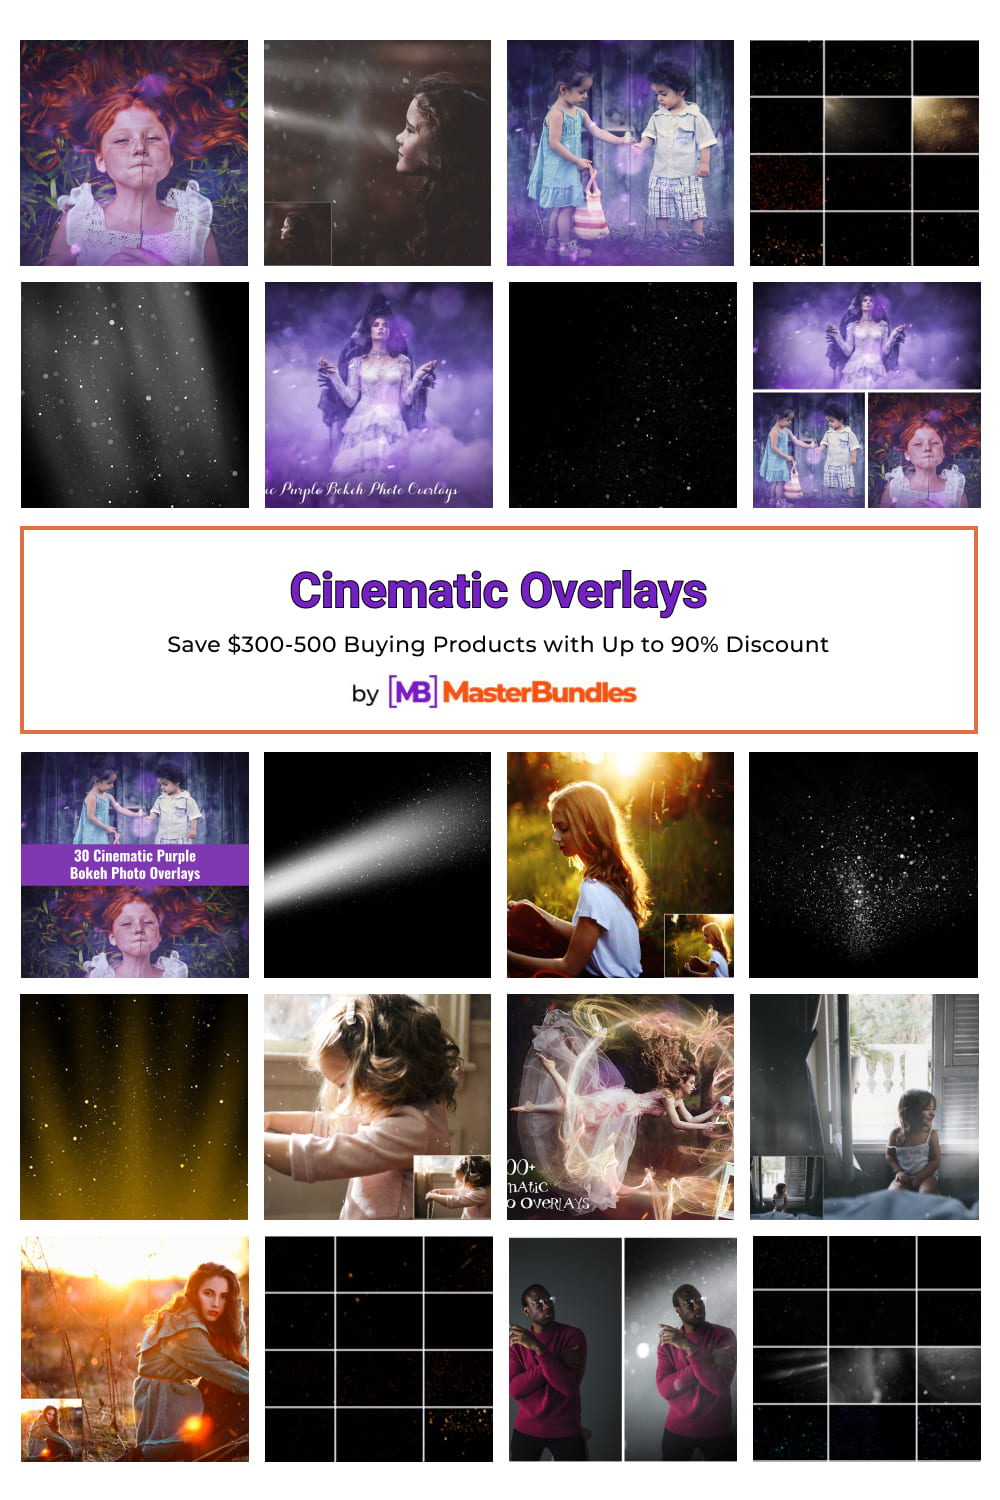 Cinematic Overlays Pinterest image.